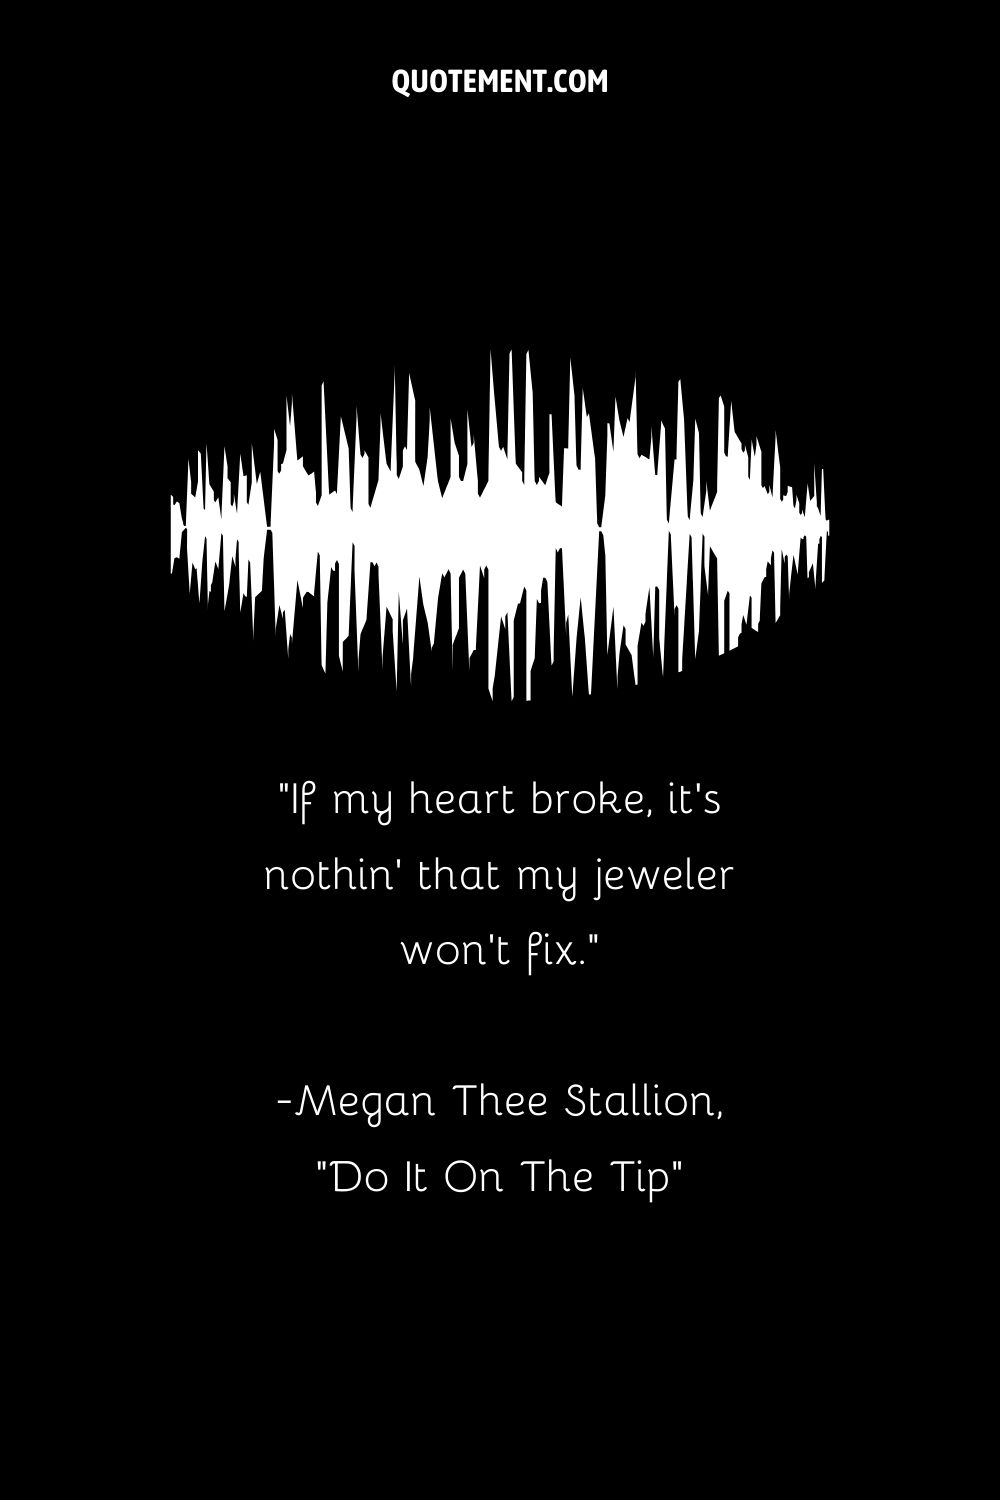 “If my heart broke, it’s nothin’ that my jeweler won’t fix.” — Megan Thee Stallion, “Do It On The Tip”